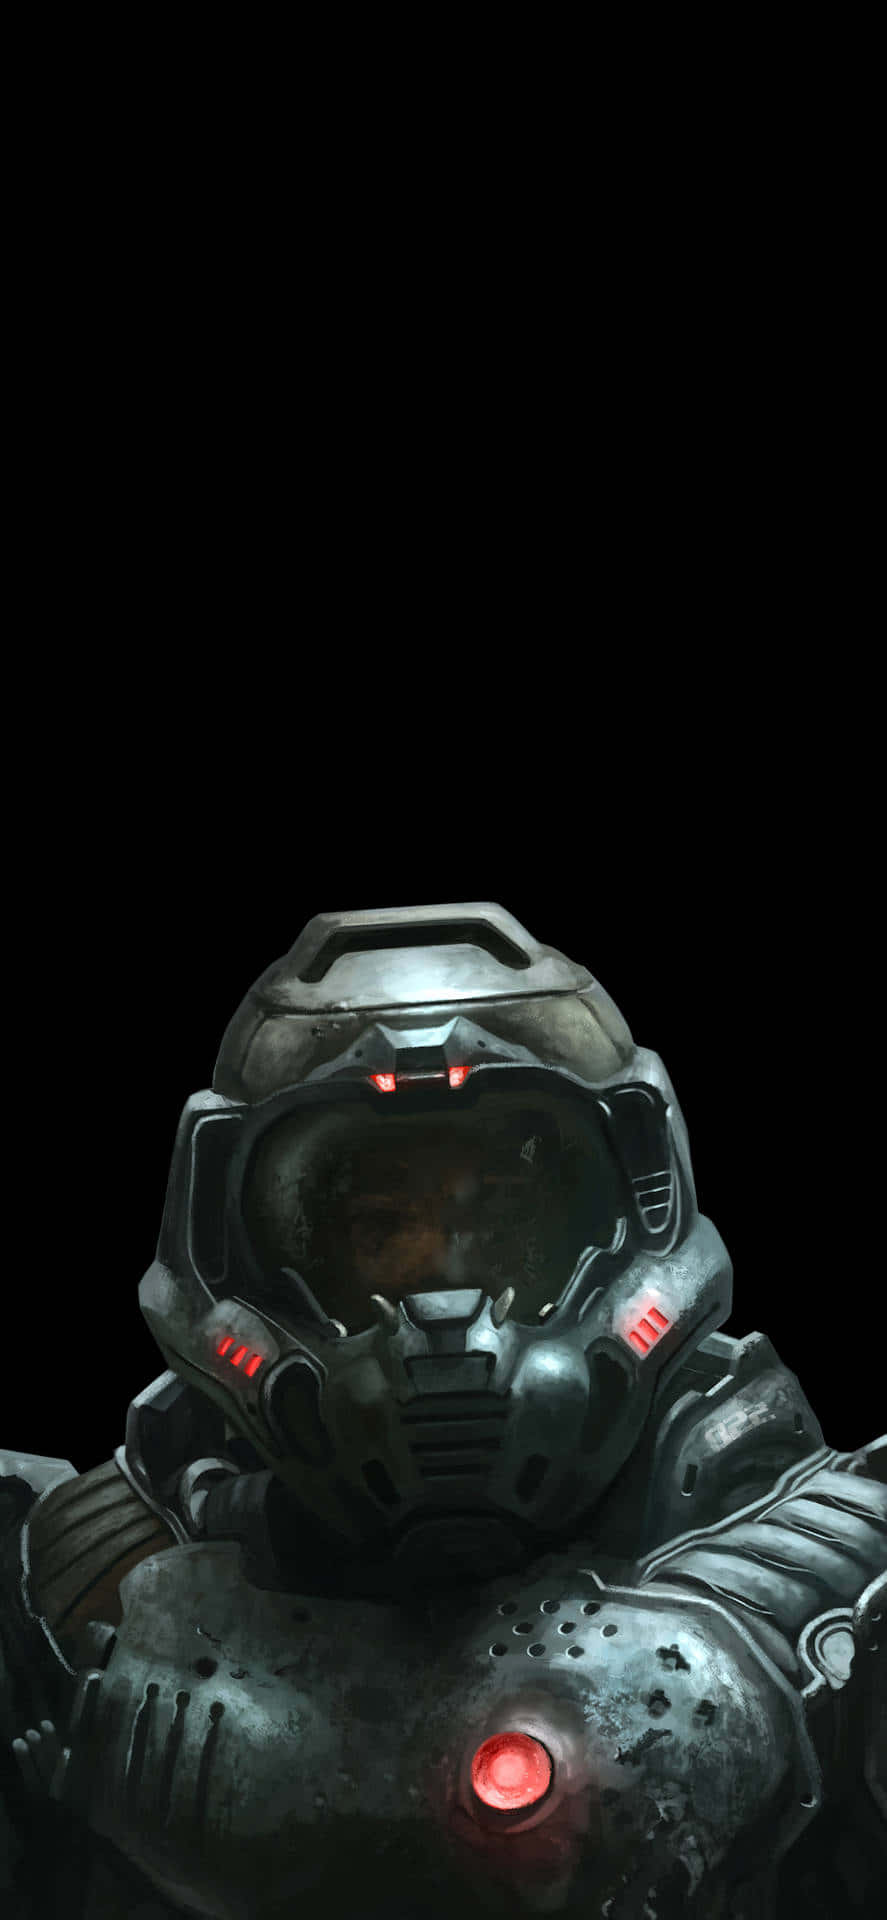 Doometernal-pixel 3xl Doom Guy-bakgrund.